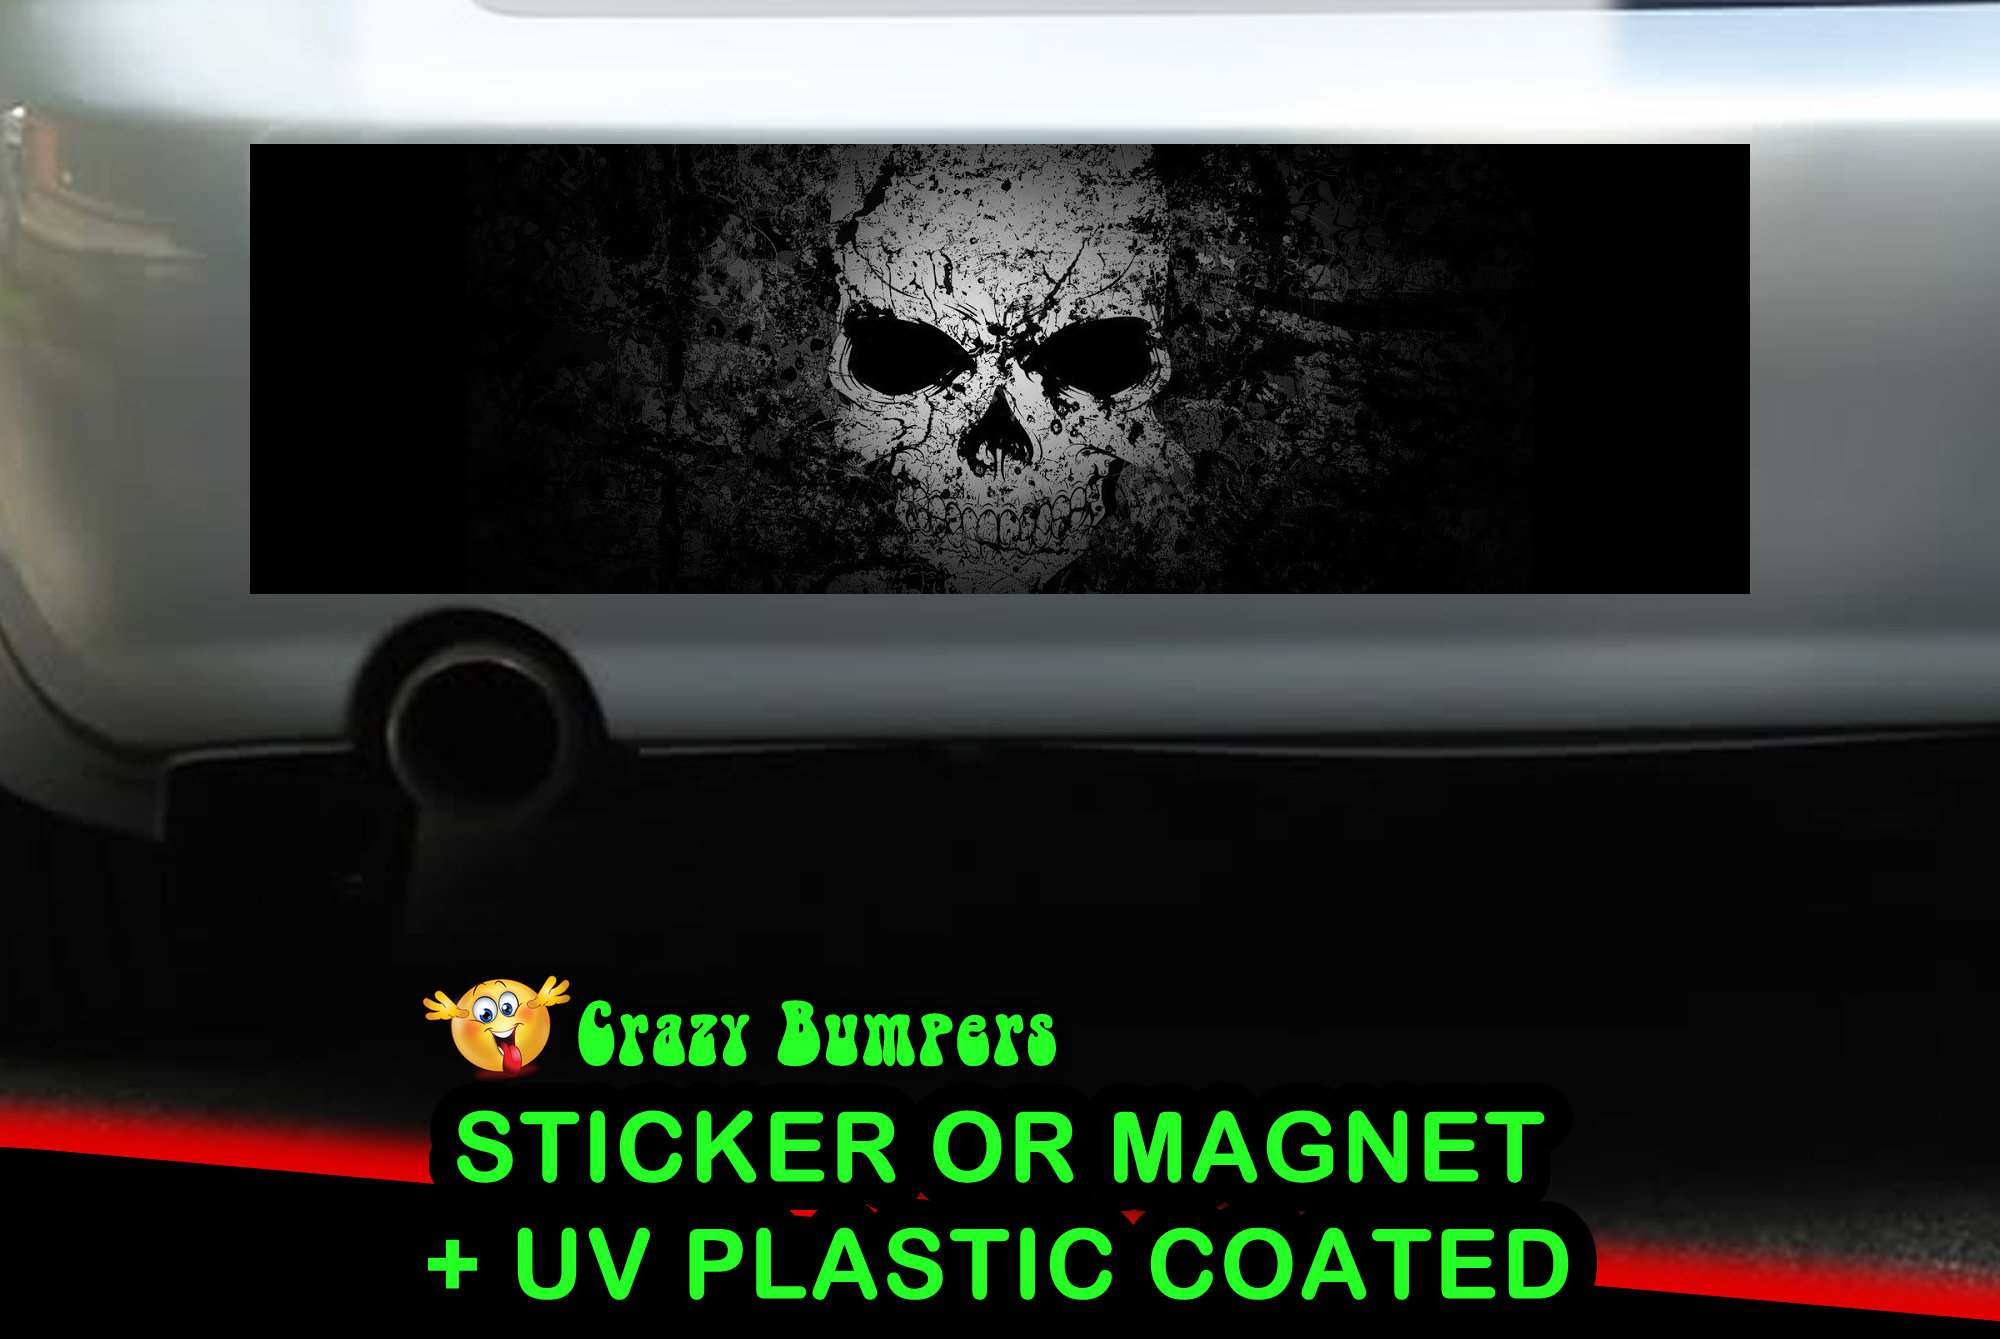 Dark Skull Bumper Sticker 10 x 3 UV Plastic Coated or Magnetic Bumper Sticker Available